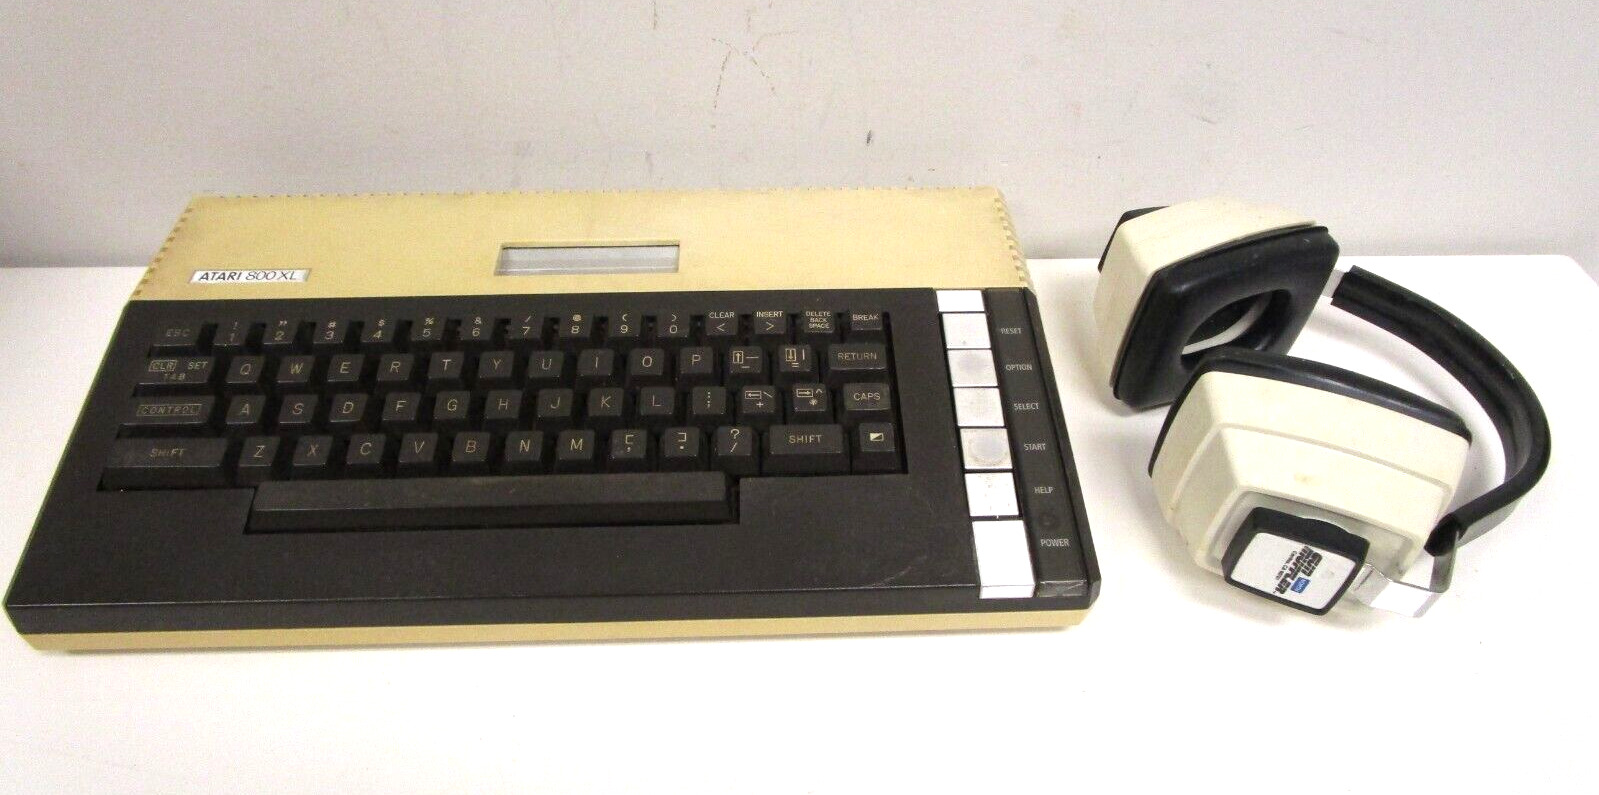 Atari 800XL Vintage 8-Bit Home Computer & Headphones Untested